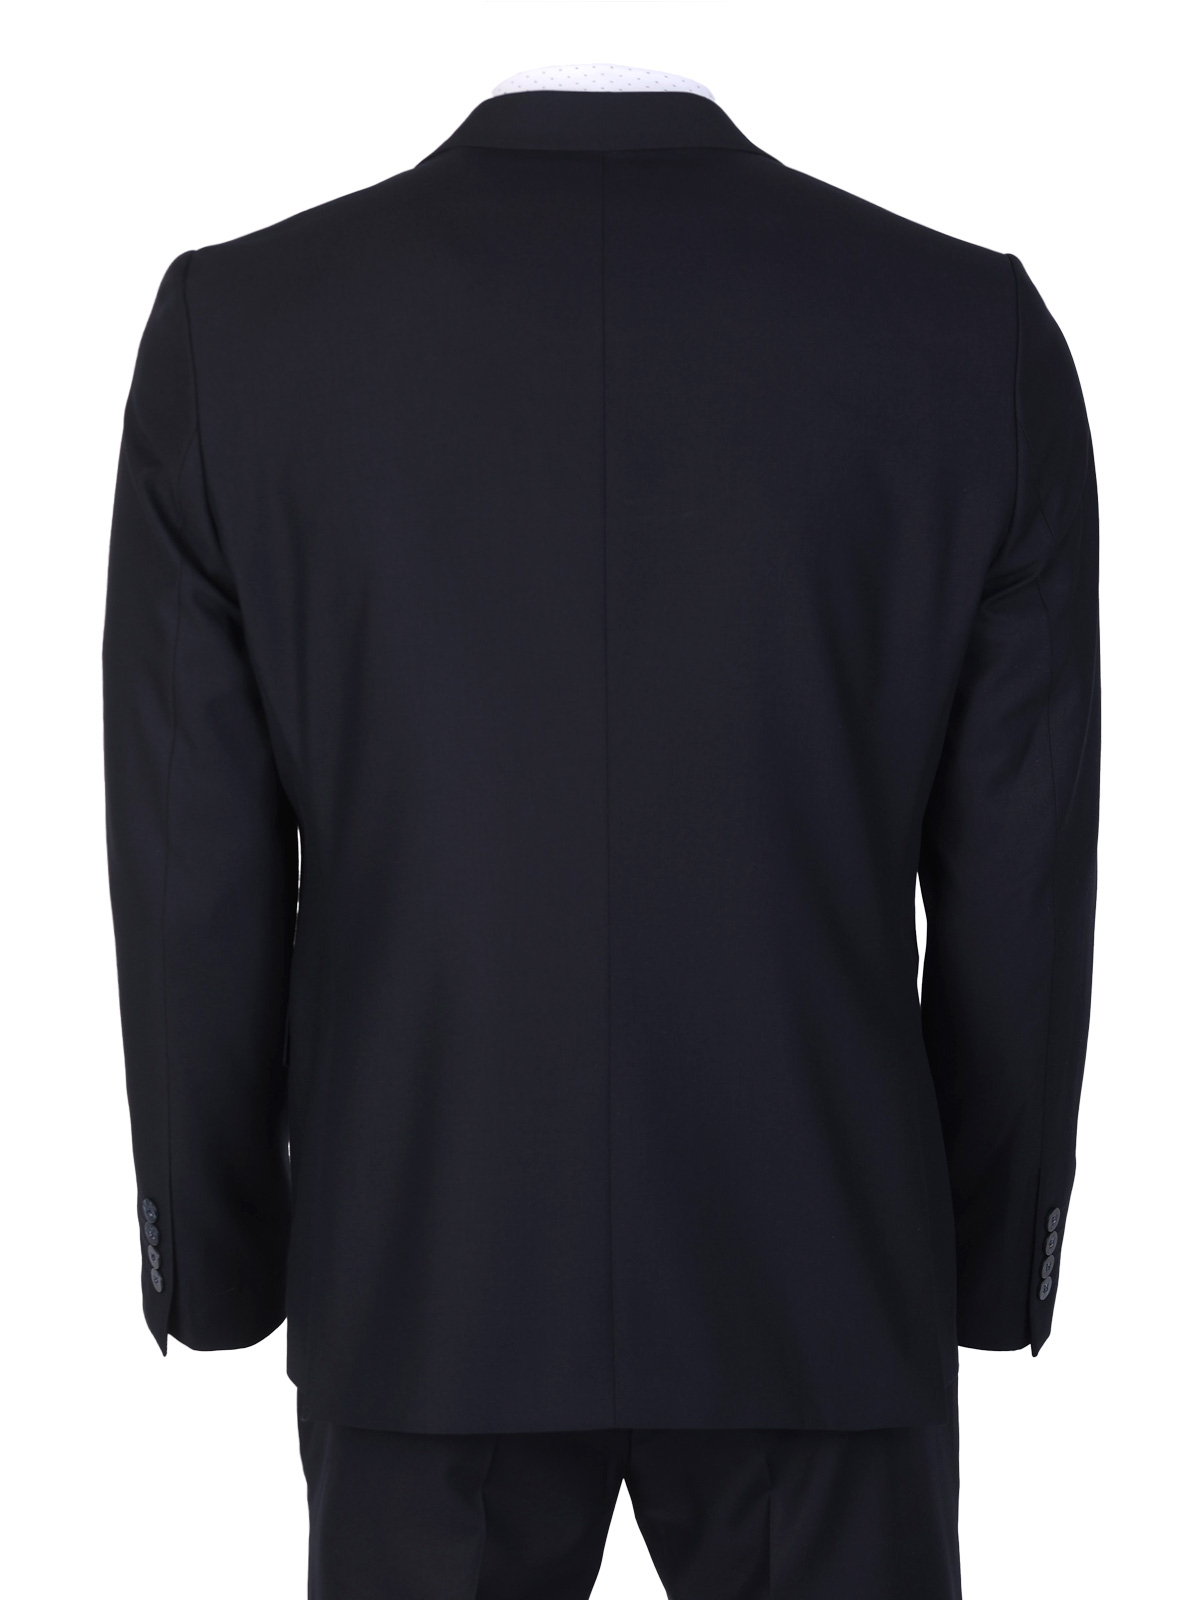 Elegant jacket in dark blue color - 64132 € 138.36 img2